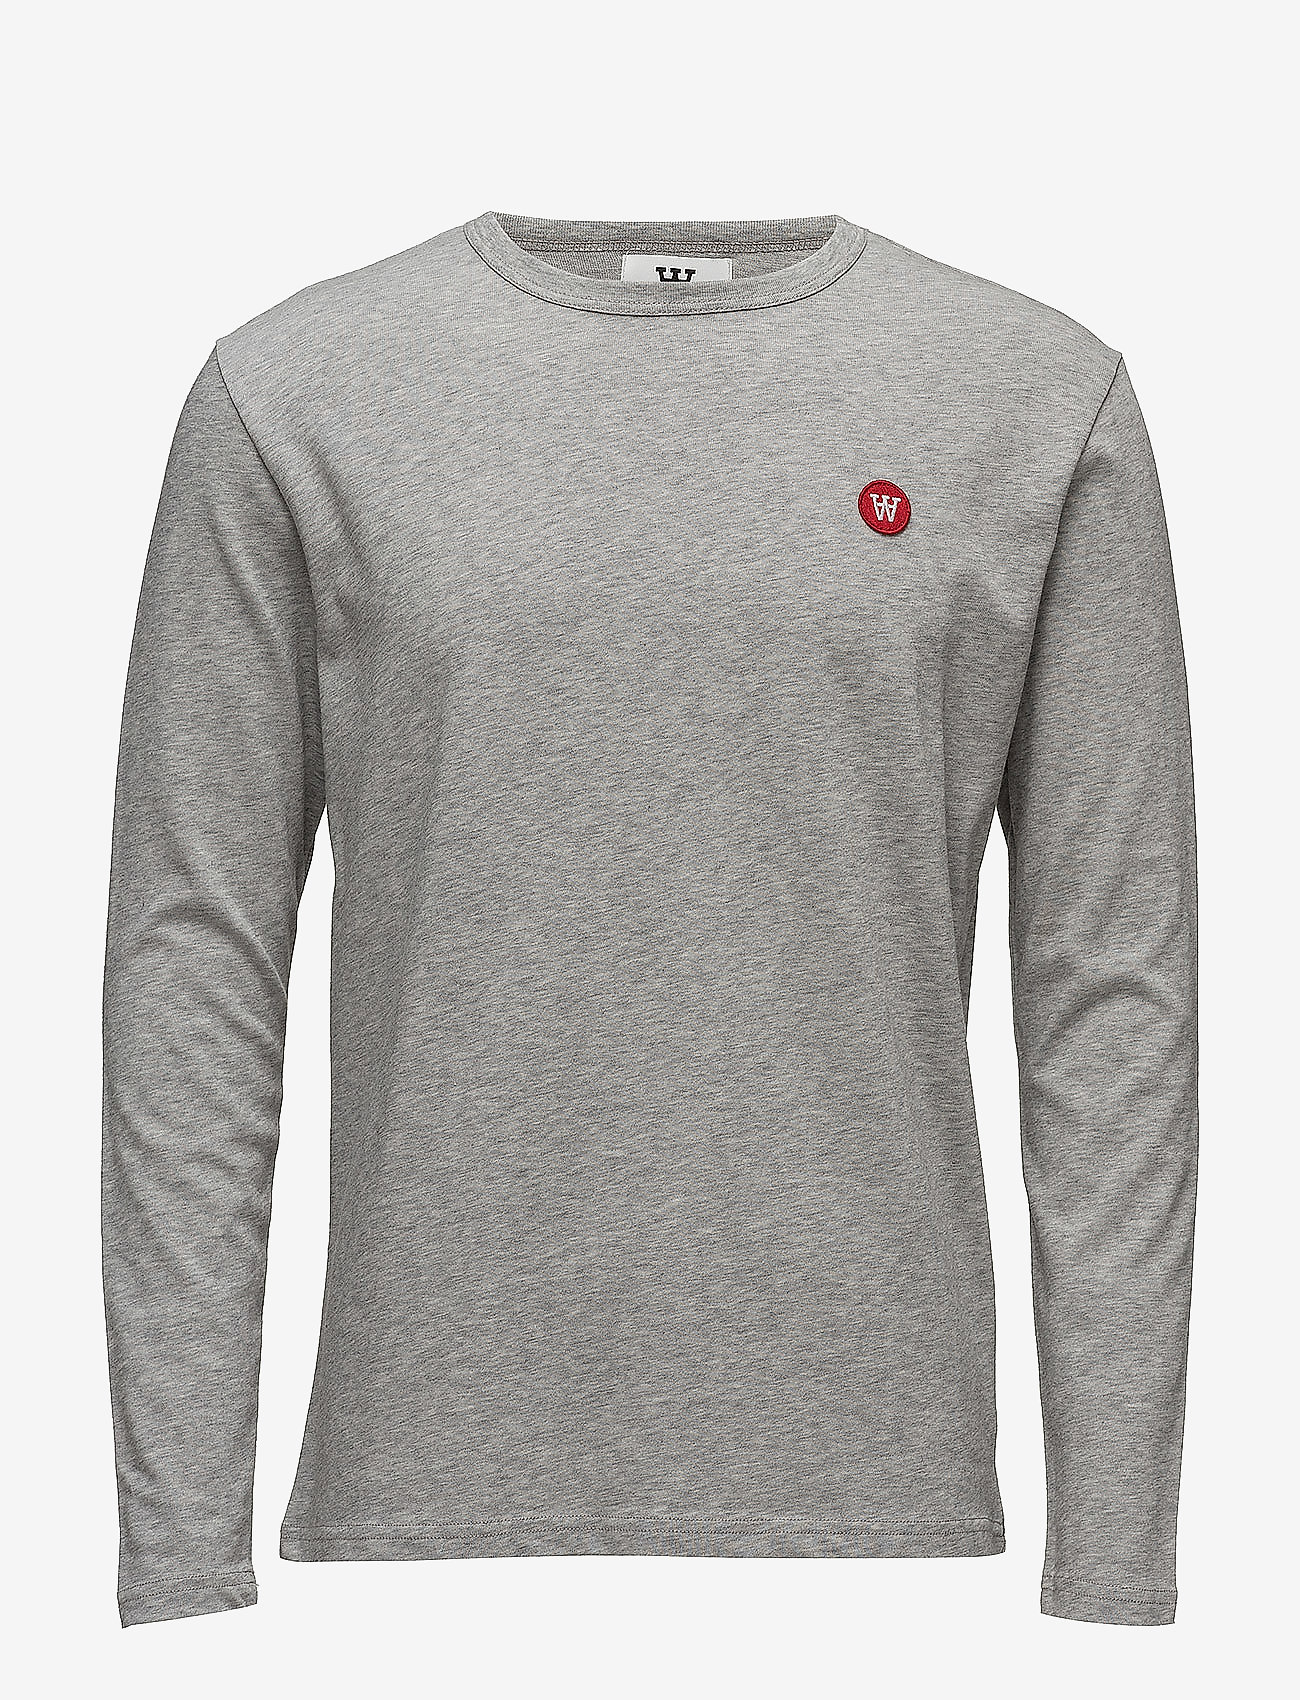 Double A by Wood Wood - Mel long sleeve - laisvalaikio marškinėliai - grey melange - 0